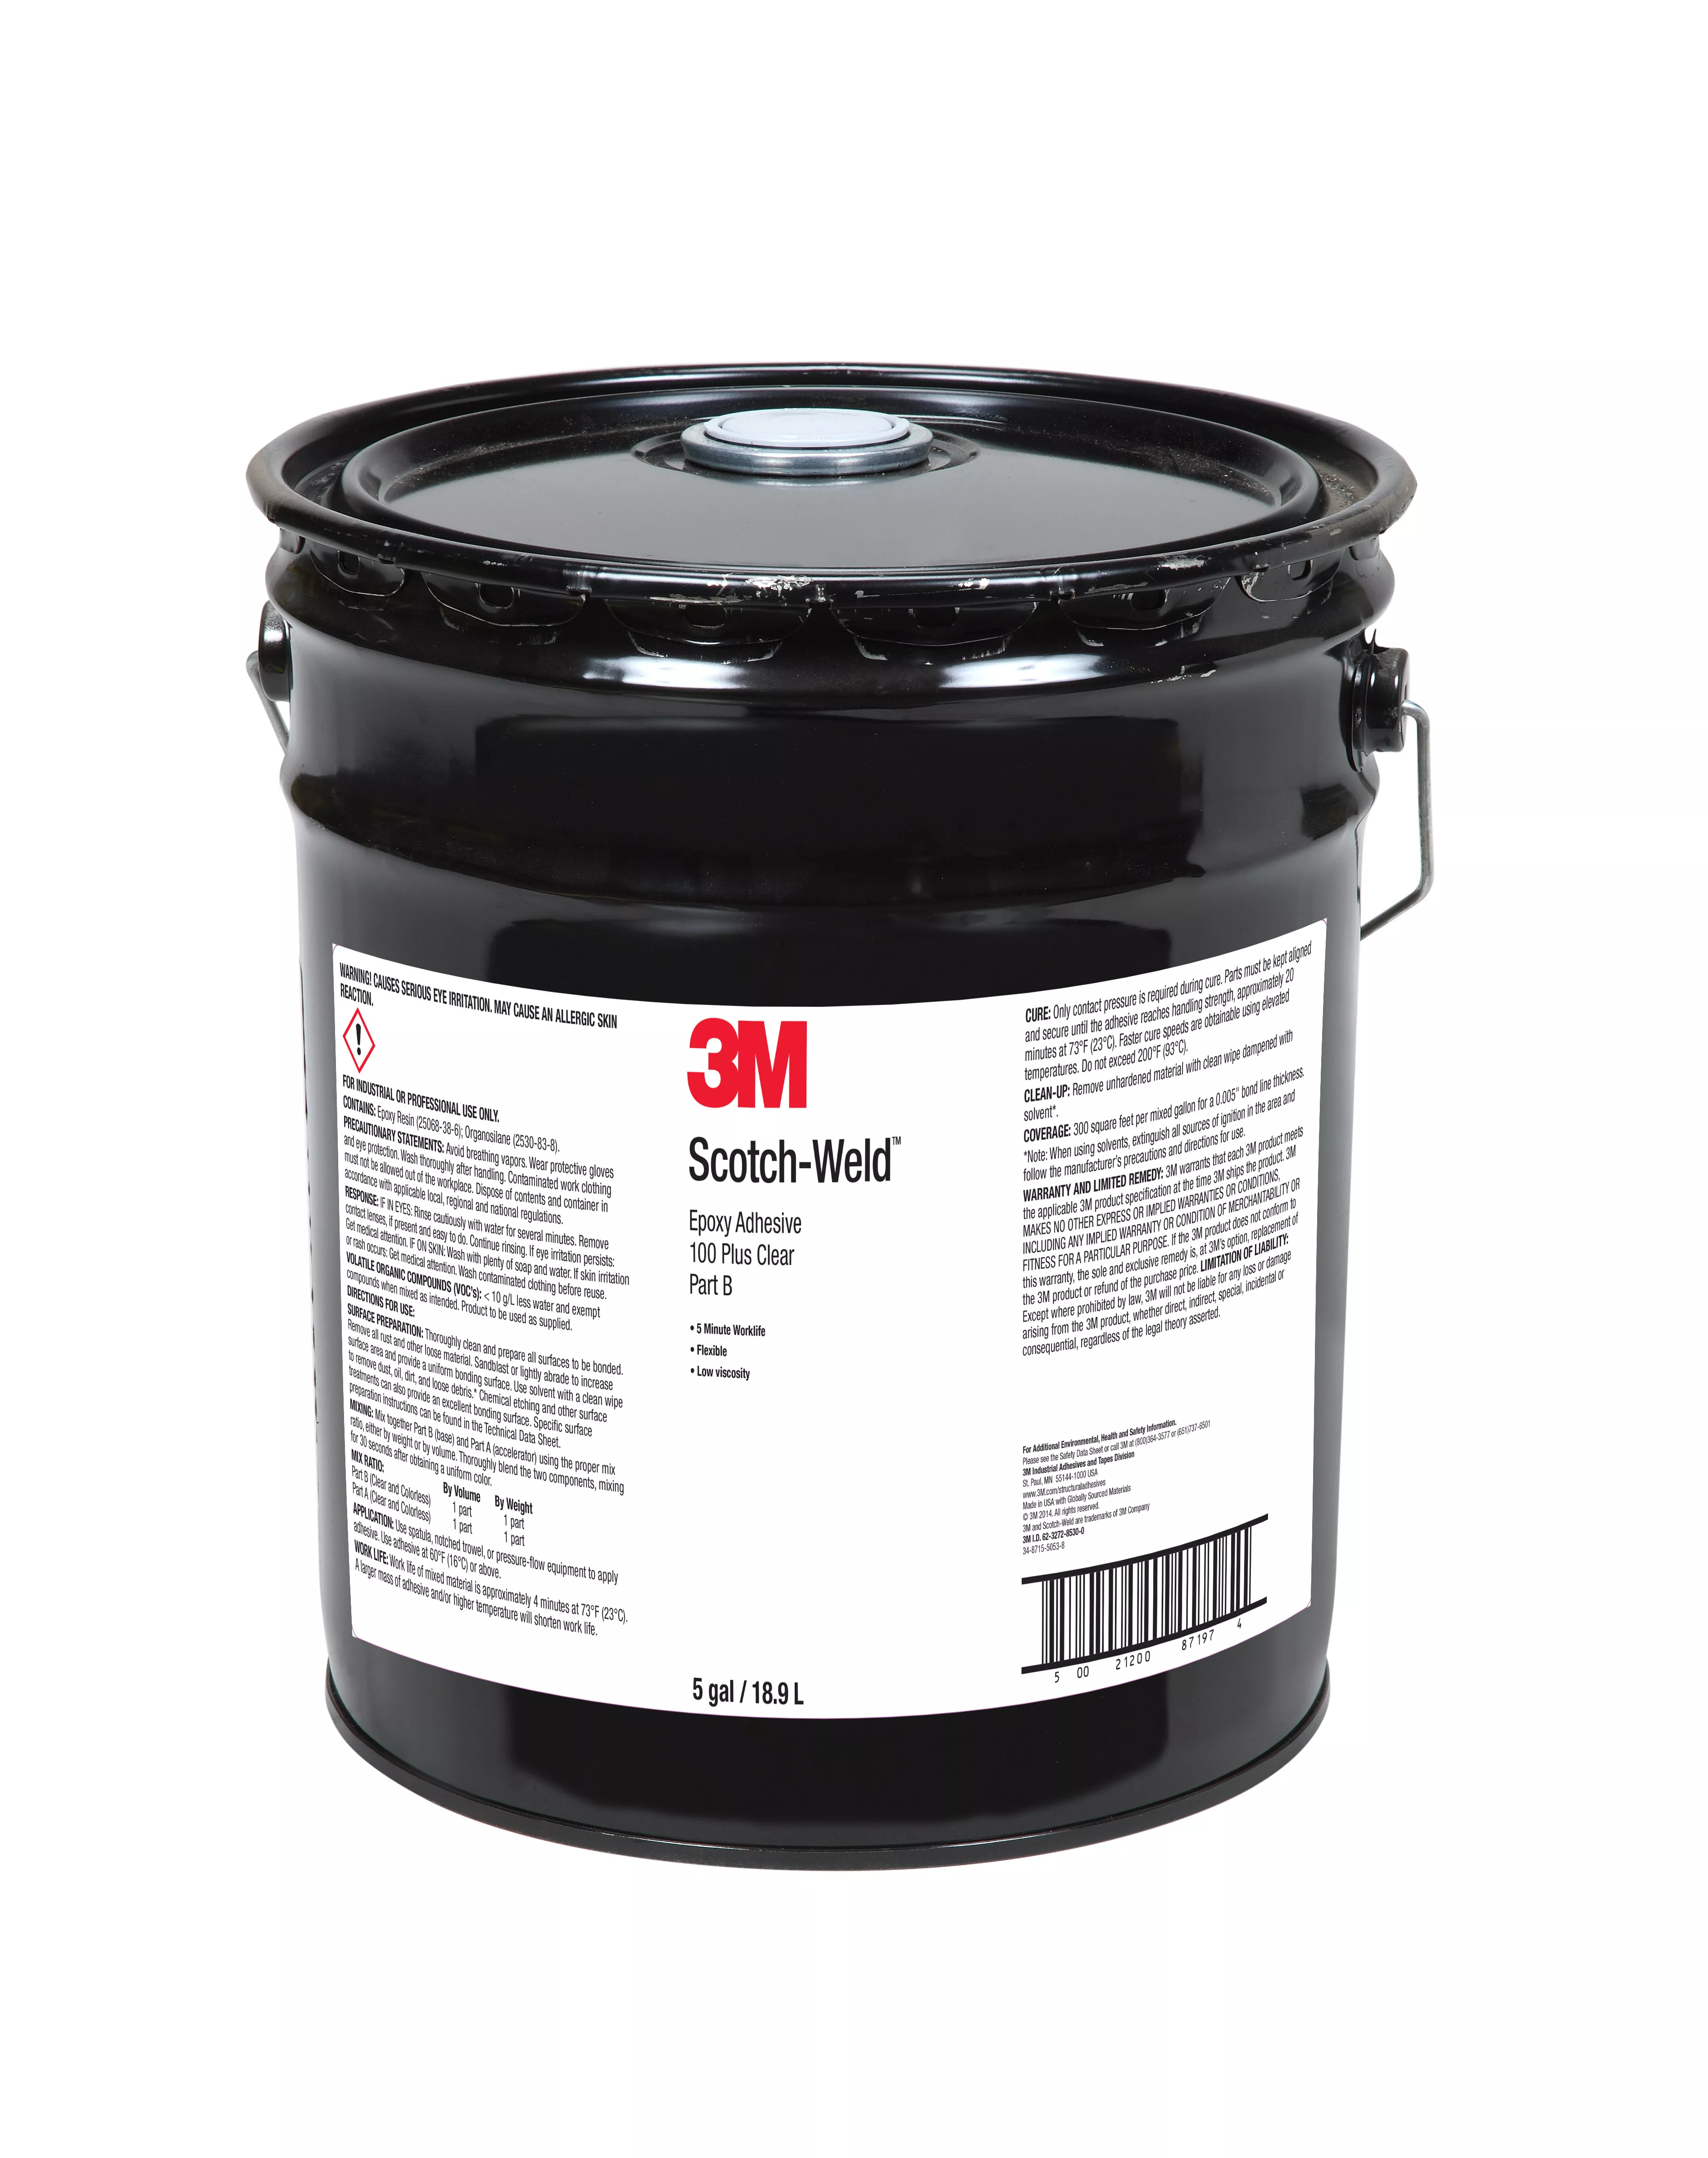 3M™ Scotch-Weld™ Epoxy Adhesive 100 Plus, Clear, Part B, 5 Gallon
(Pail), Drum